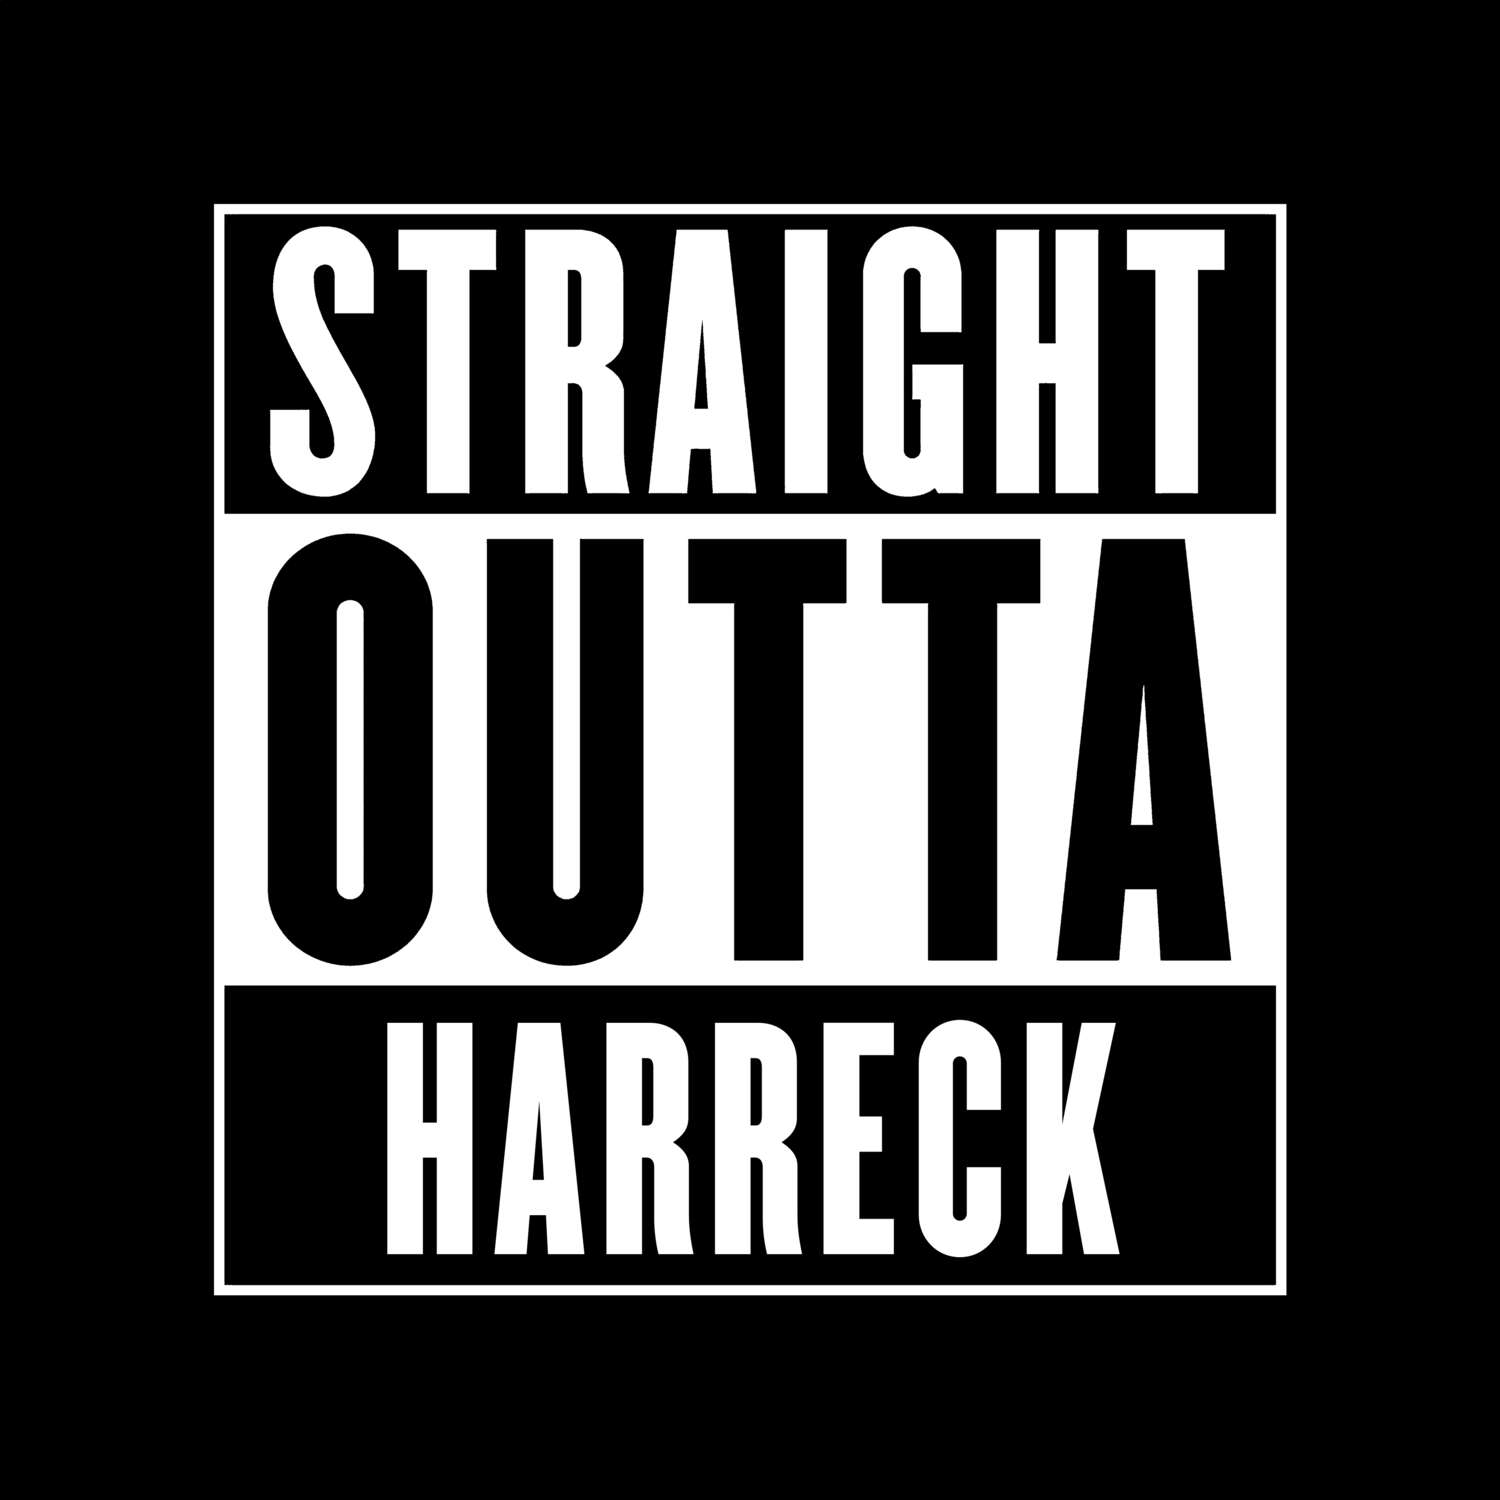 Harreck T-Shirt »Straight Outta«